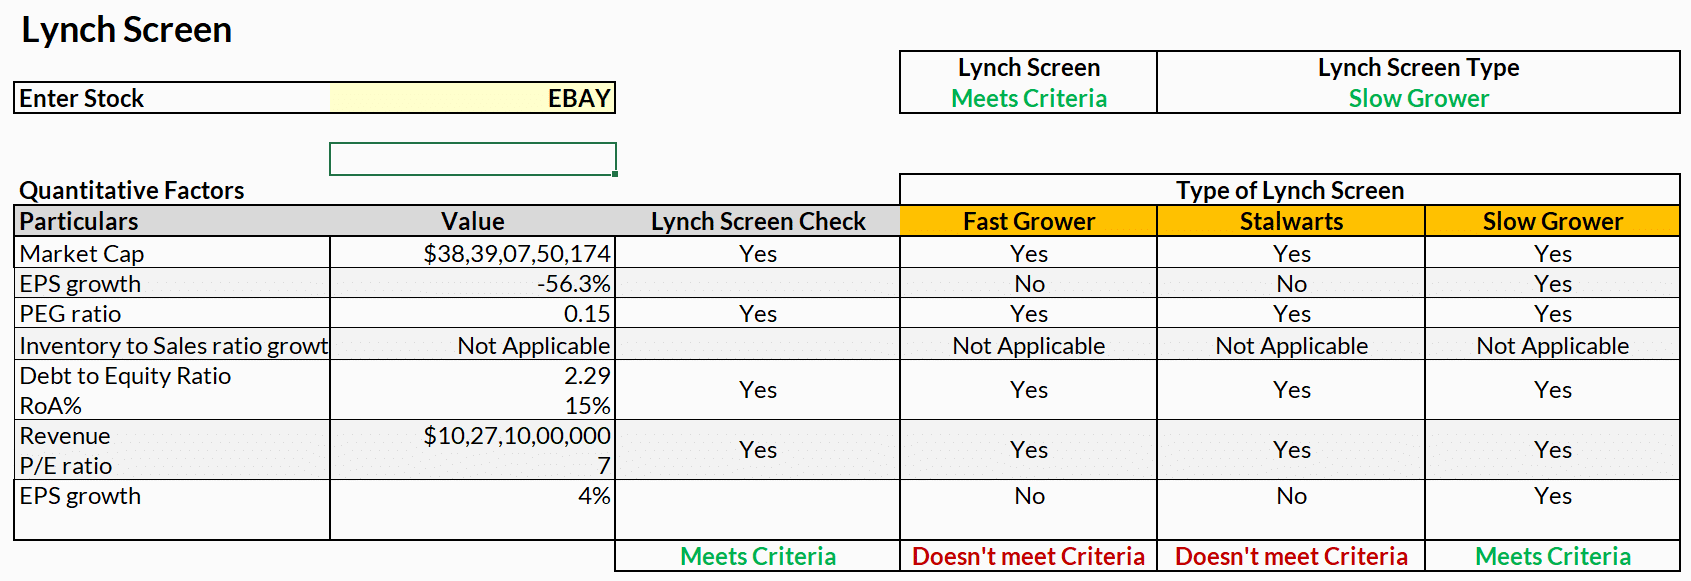 Lynch Screen Template- Slow grower